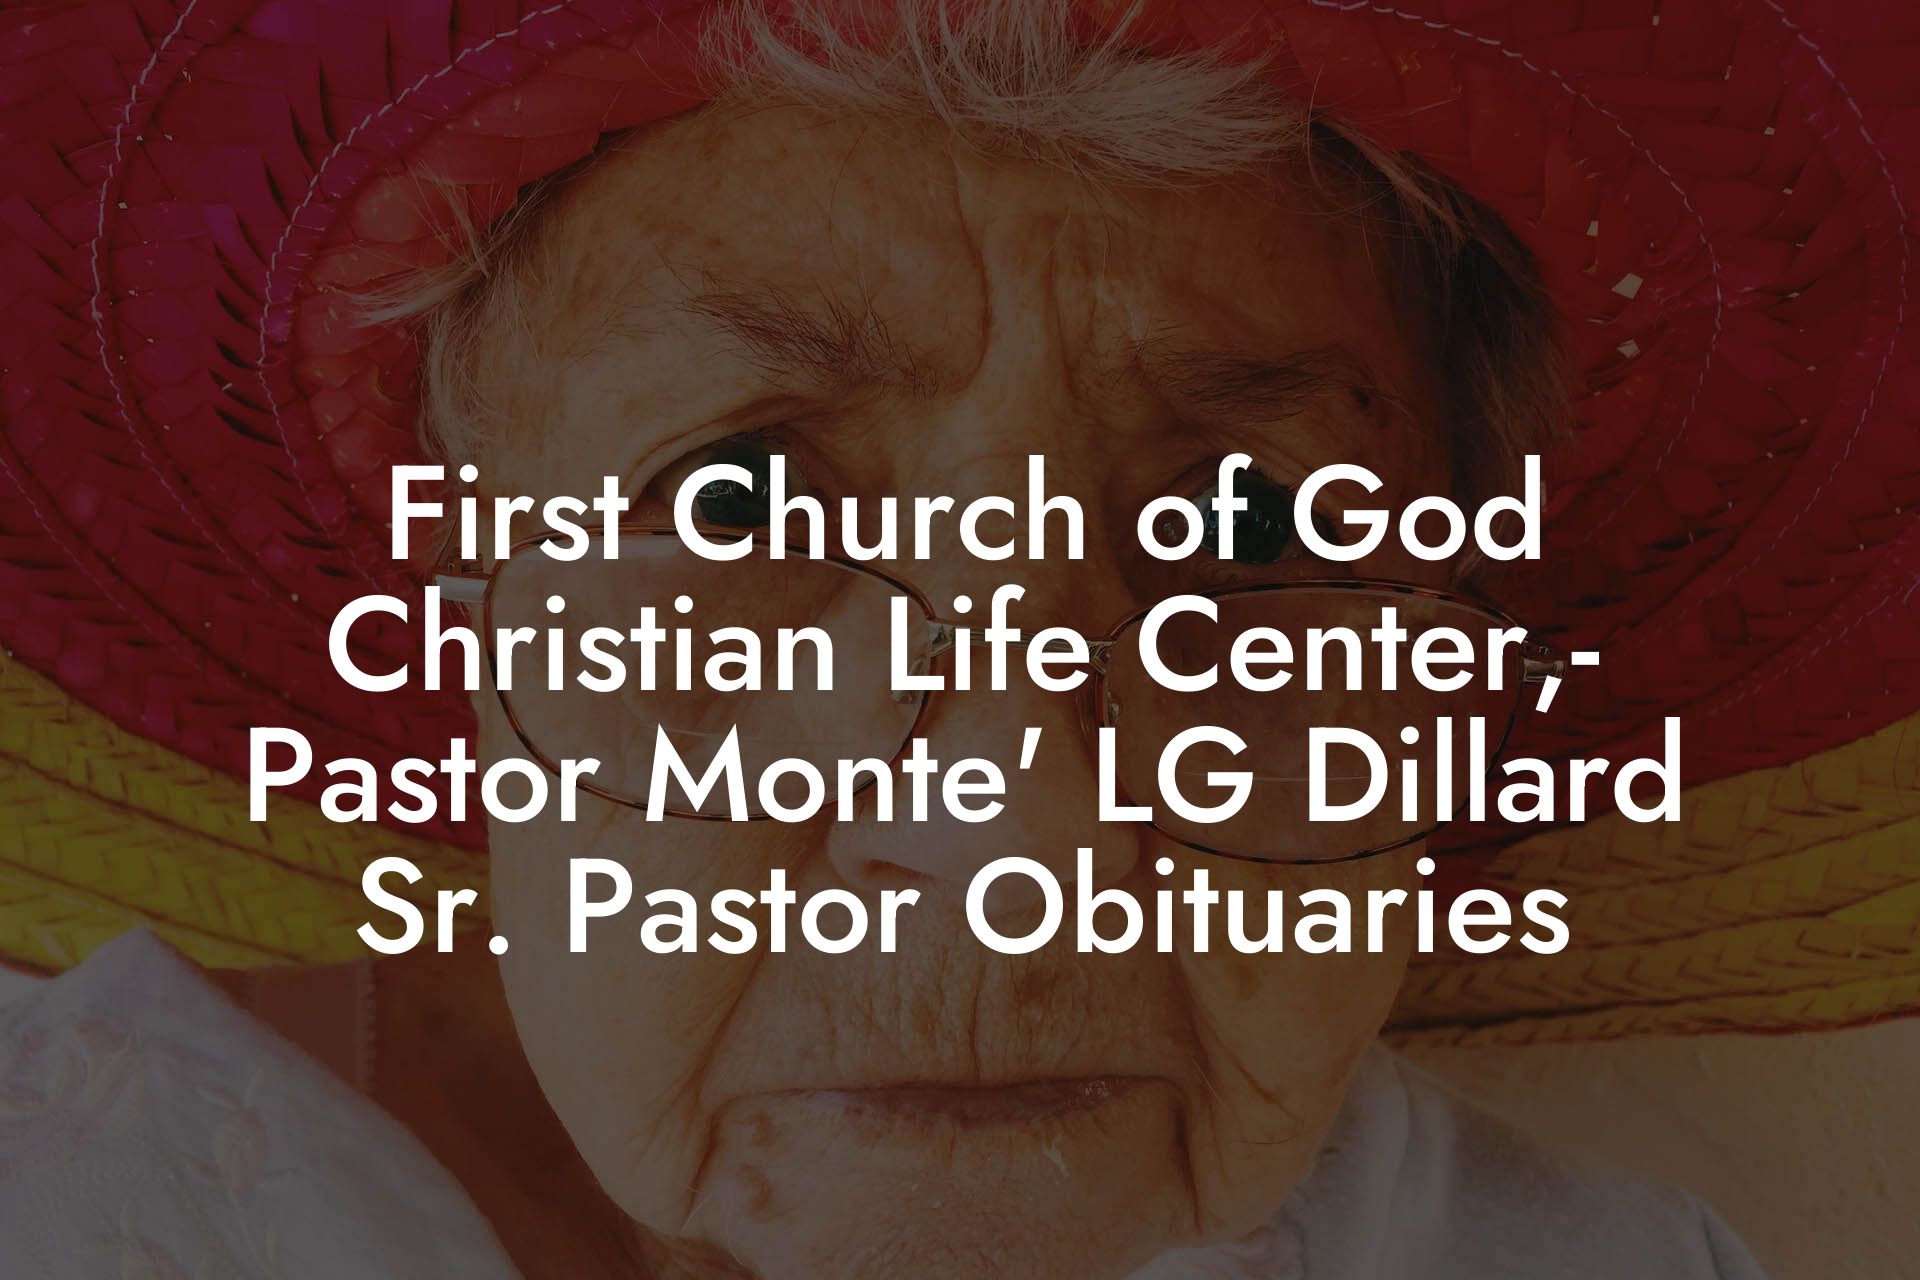 First Church of God Christian Life Center,- Pastor Monte' LG Dillard Sr. Pastor Obituaries